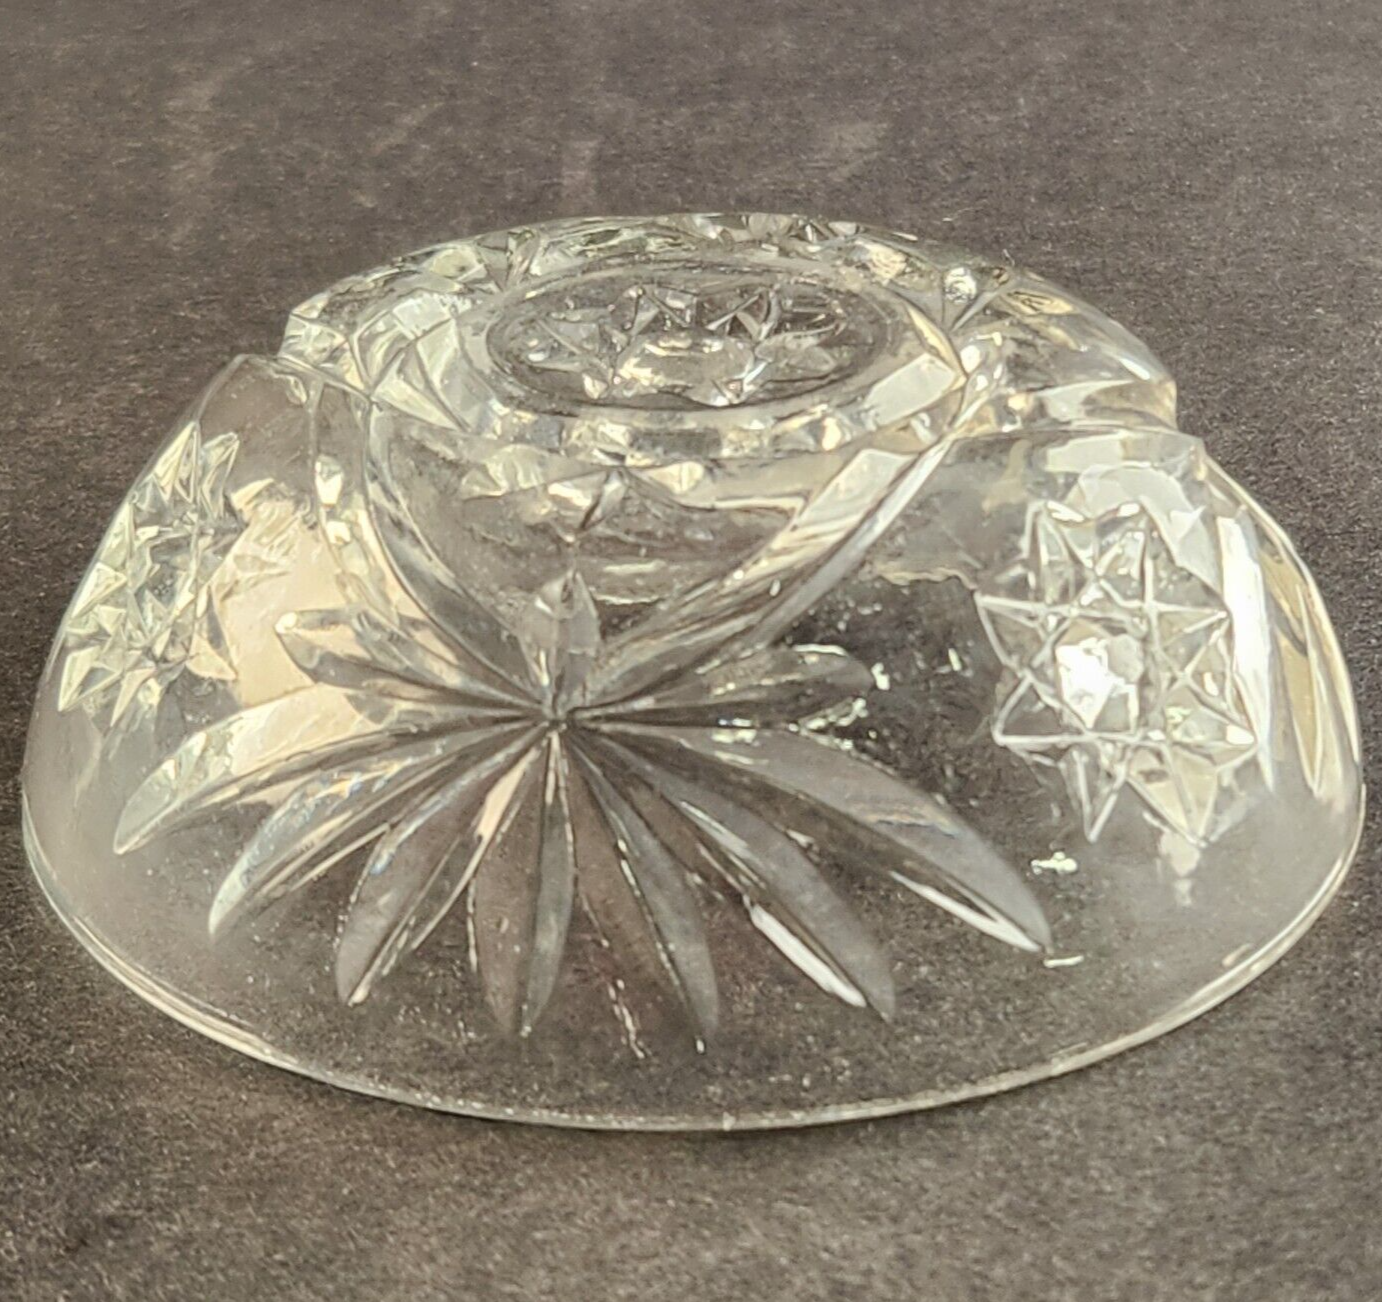 Lead Crystal Glass Bowl Beautiful Sharp Designs 4" Wide x 1.5" Tall Home Decor